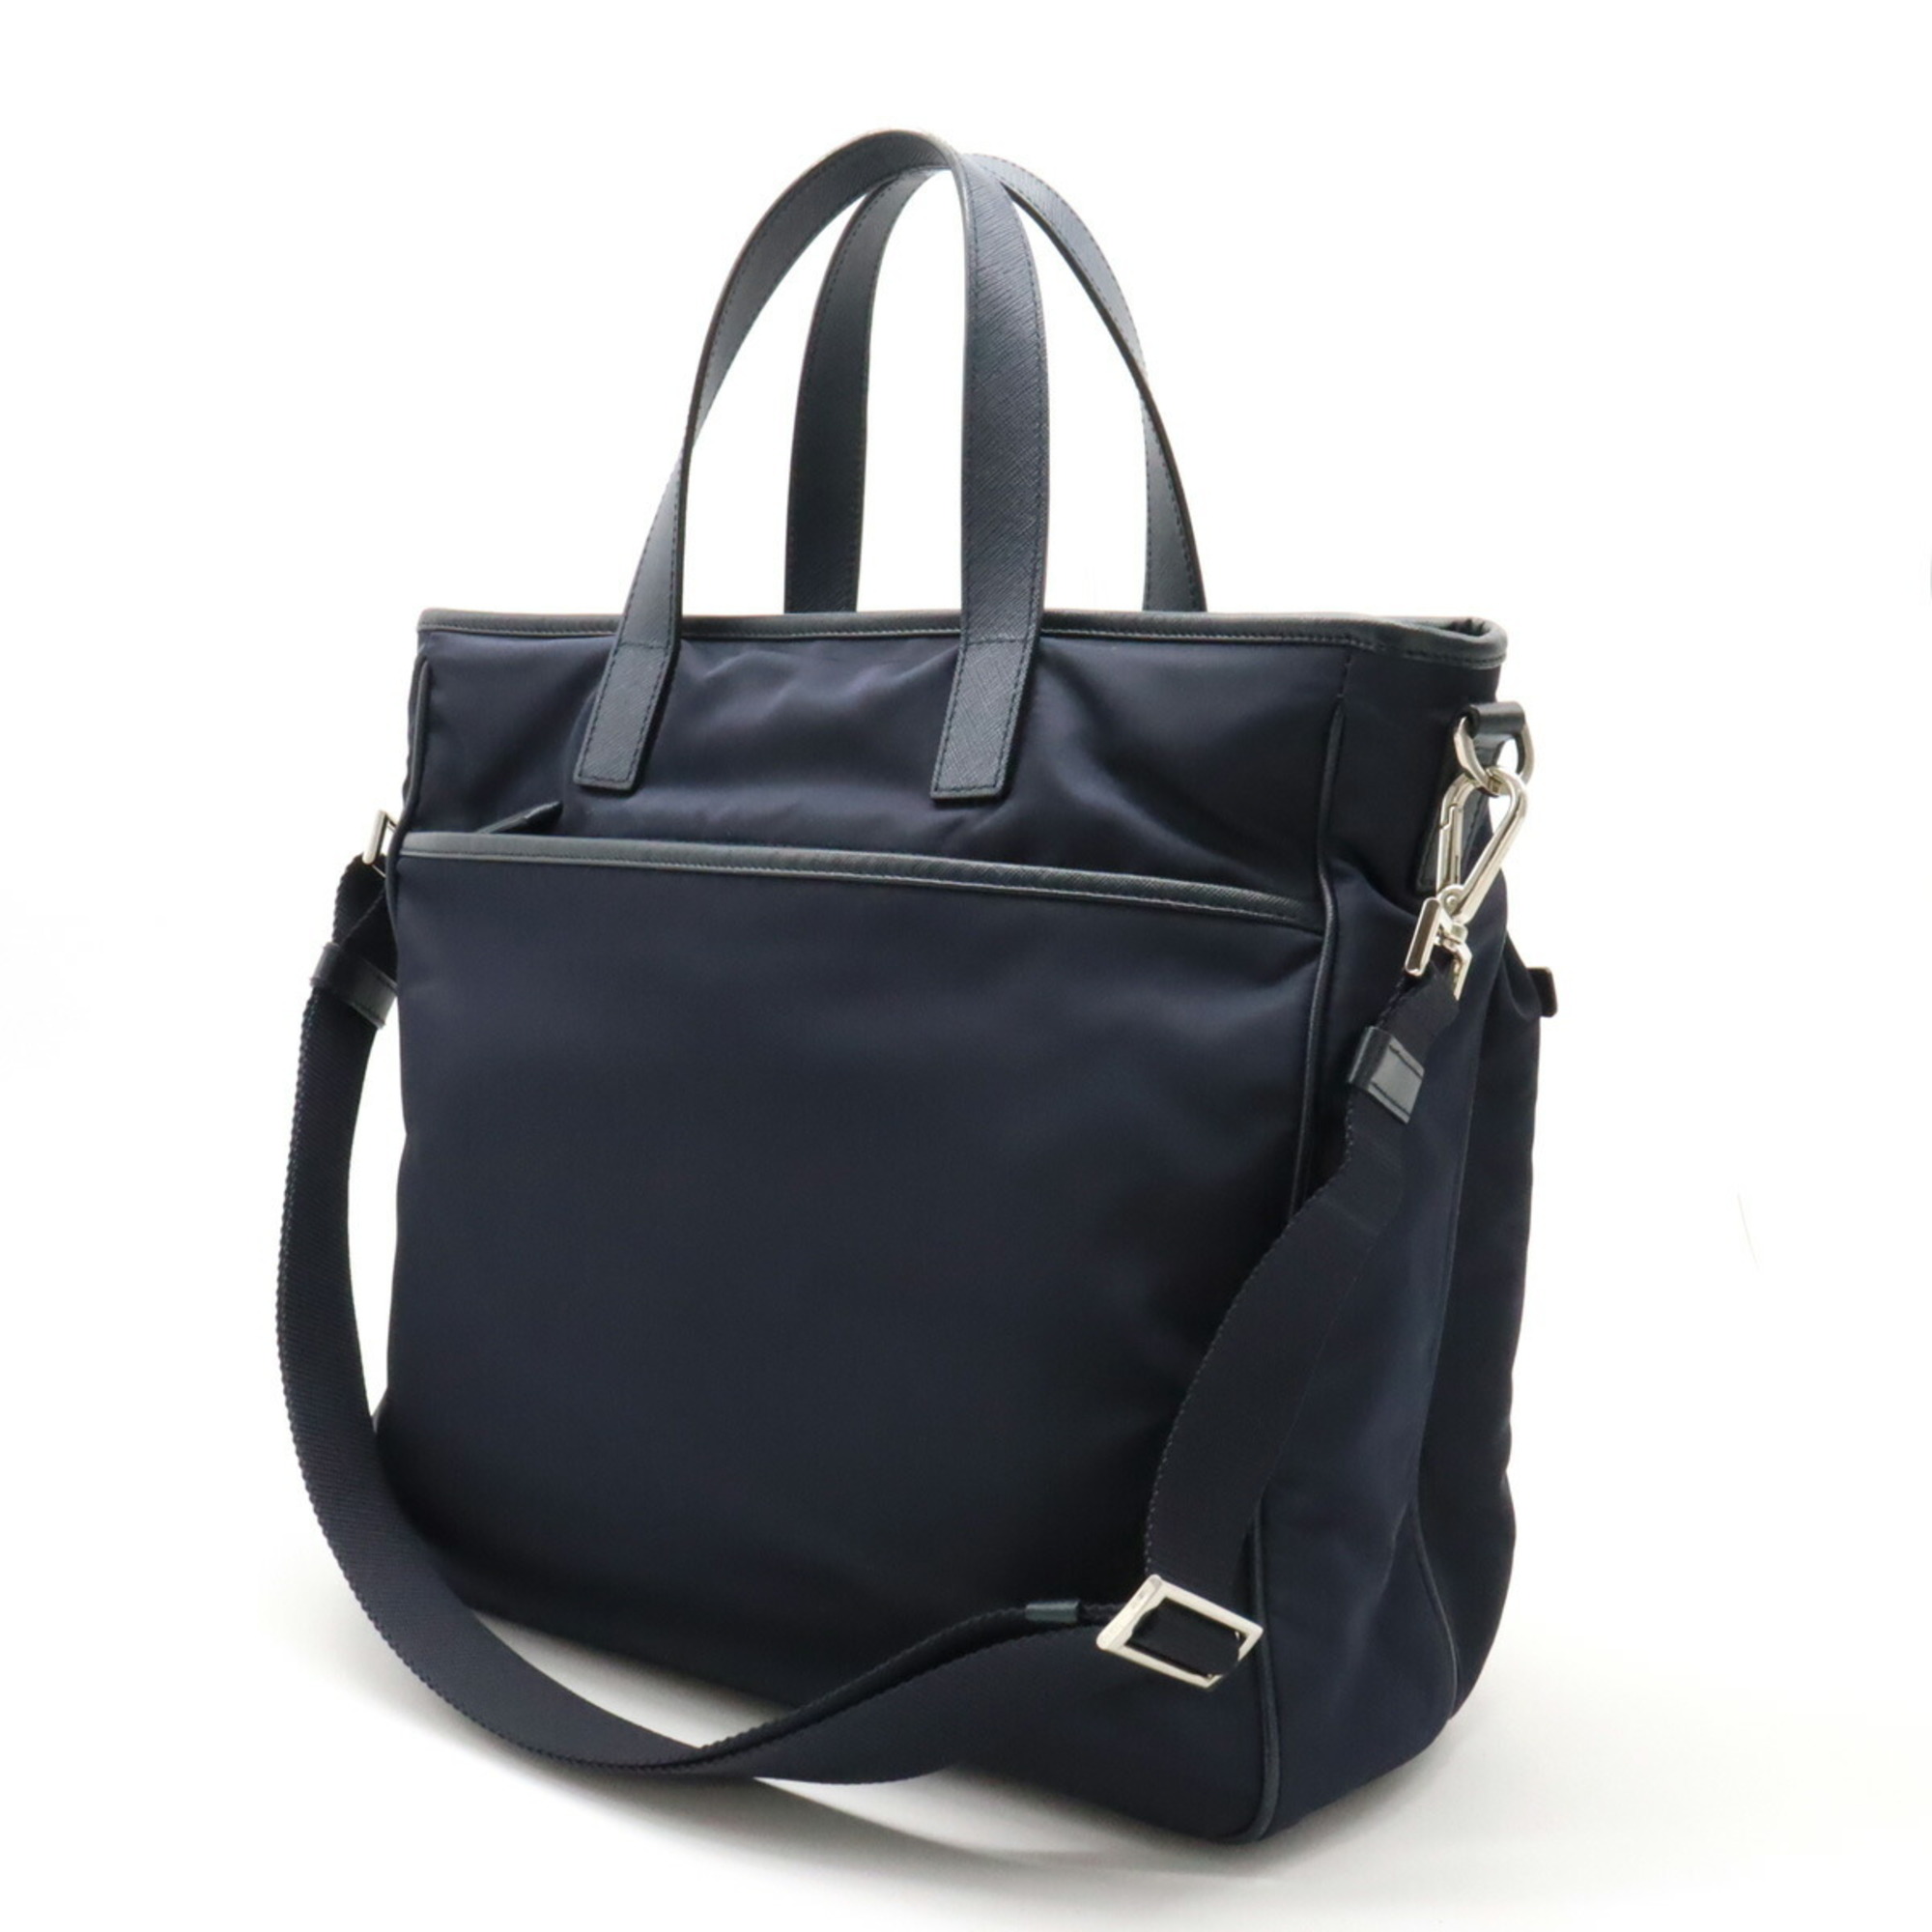 PRADA Prada Tote Bag Shoulder Nylon Leather BLEU Navy Purchased at a domestic boutique 2VG860